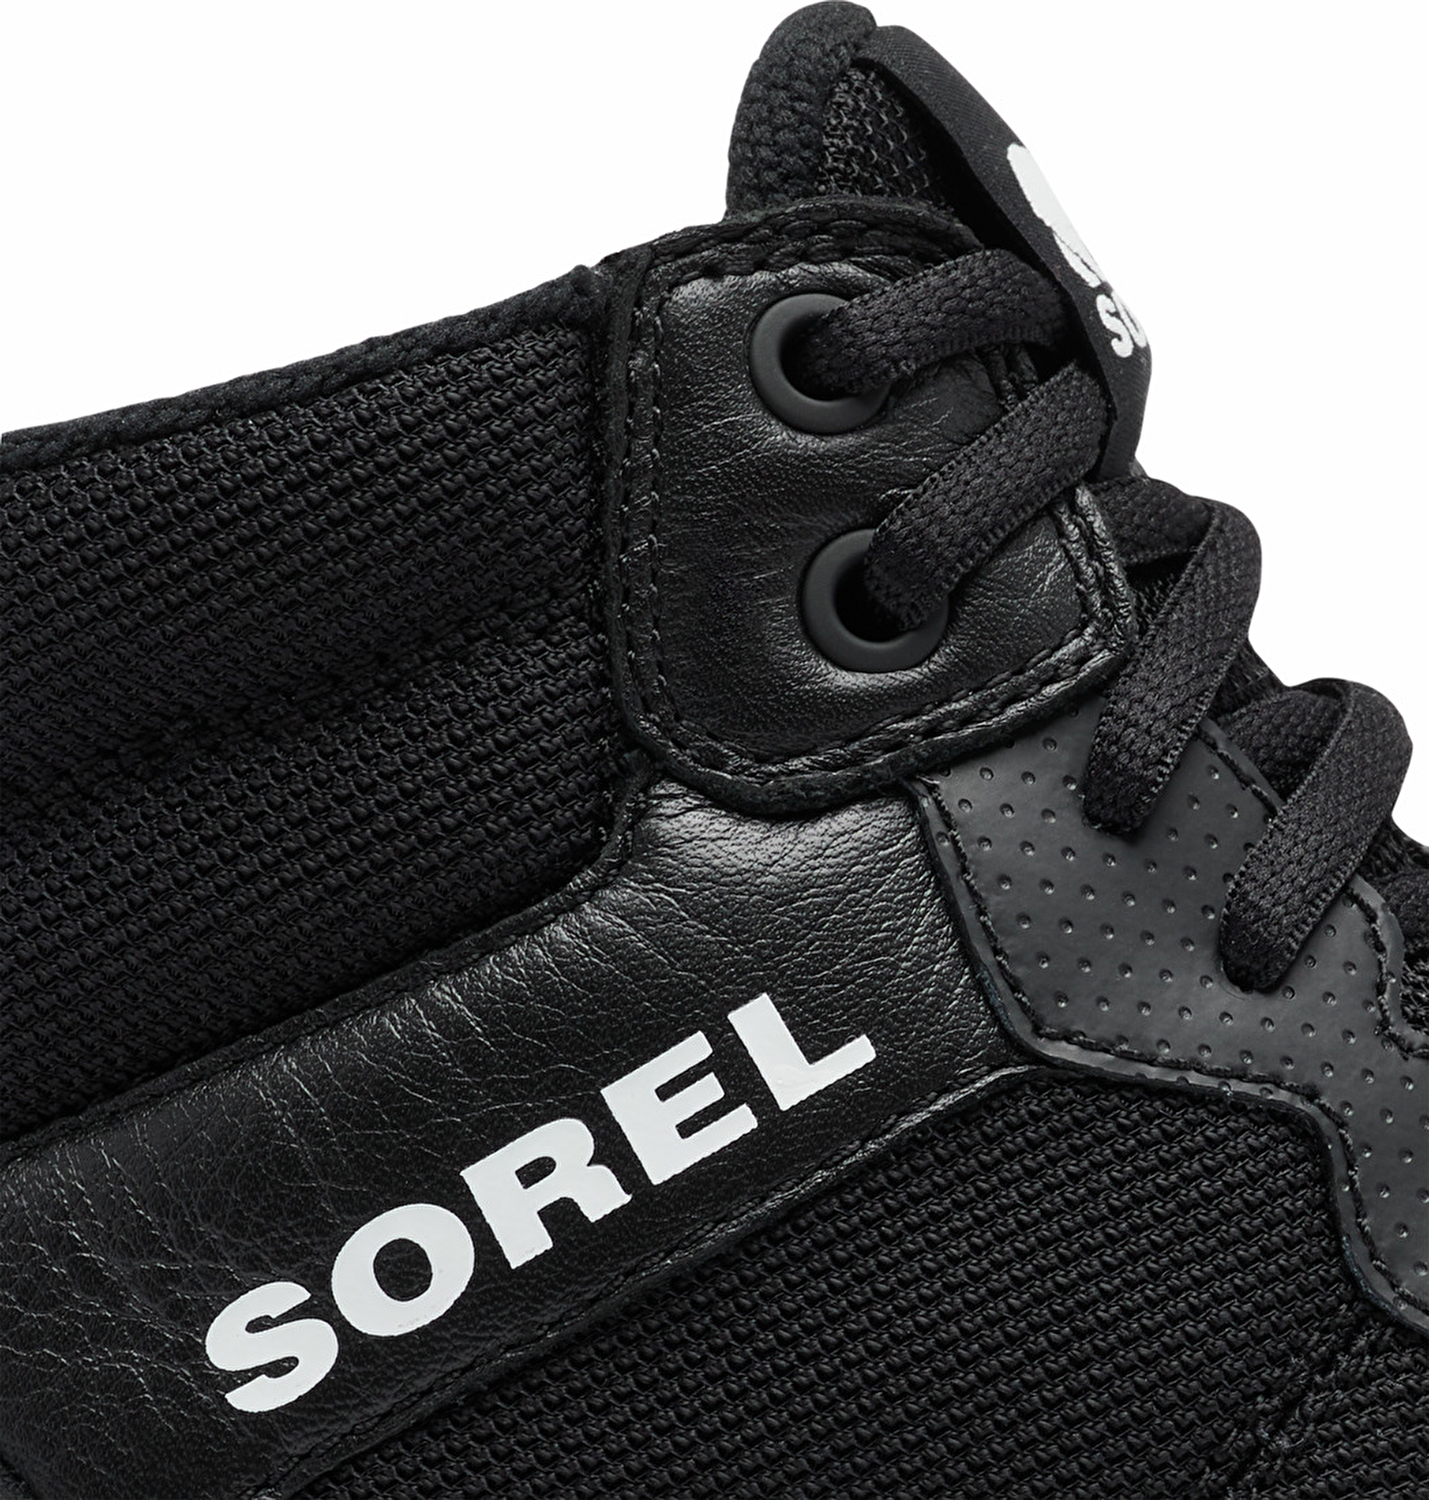 Sorel Explorer II Sneaker Mid Wp Kadın Kısa Bot